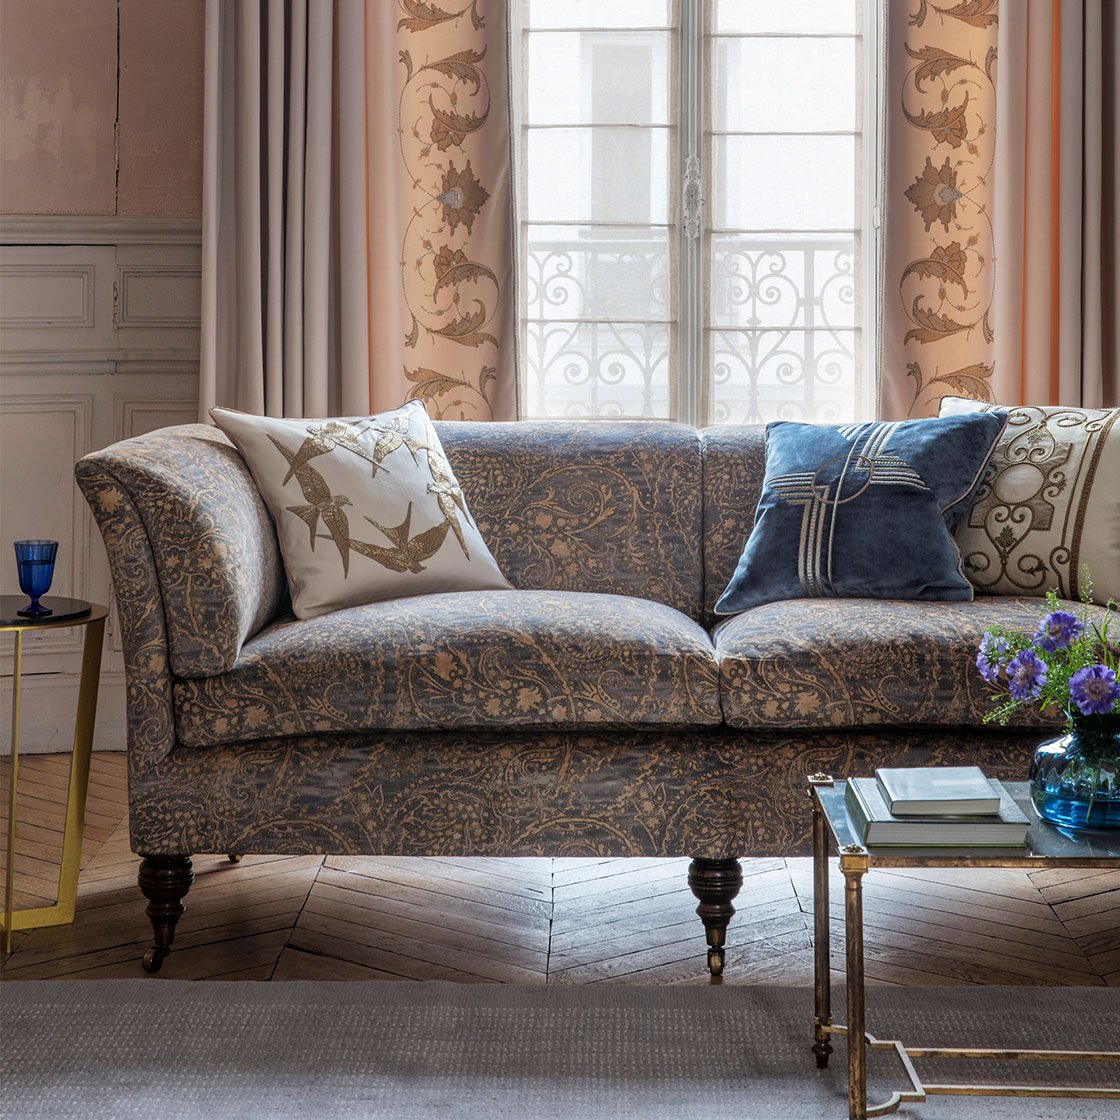 Pompadour sofa in Balthazar - Dusk with Rigoletto curtains, Elvira, Earhart and Cordoba cushions - Beaumont & Fletcher